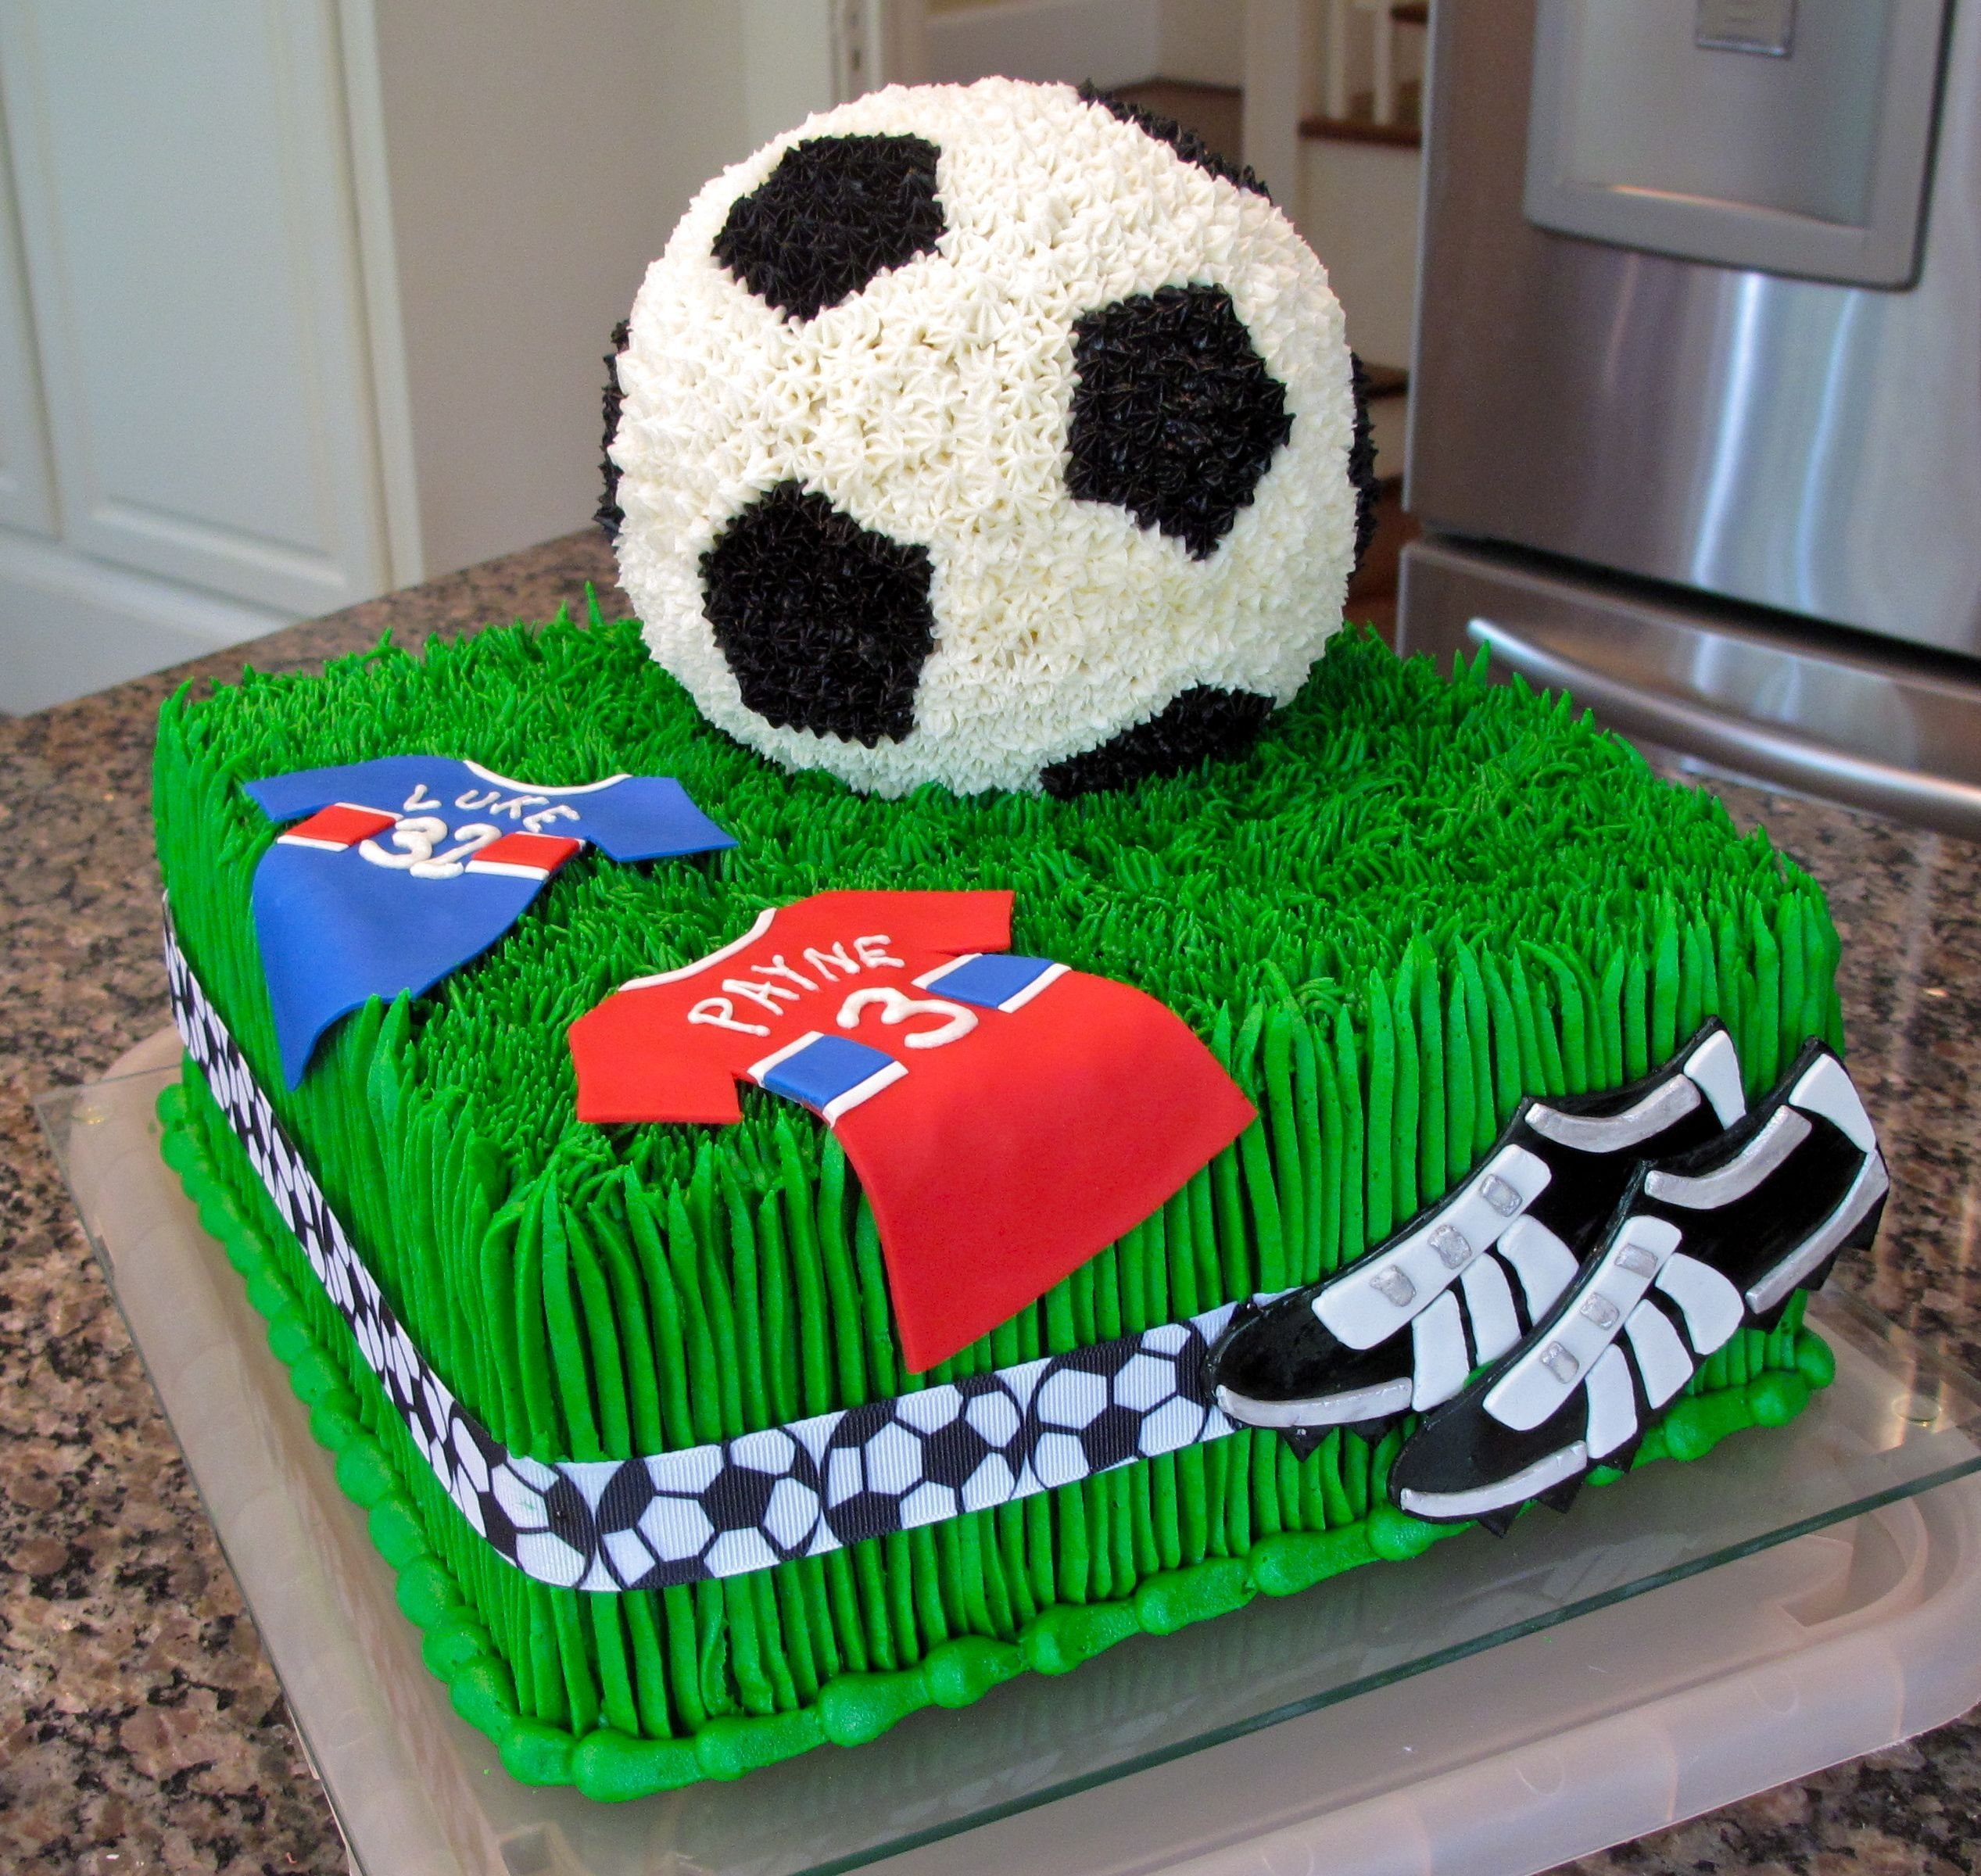 Торт на тему мальчиков. Торт «футболисту». Торт с футбольной тематикой. Торт футбольный для мальчика. Торт с футбольной тематикой для ребенка.